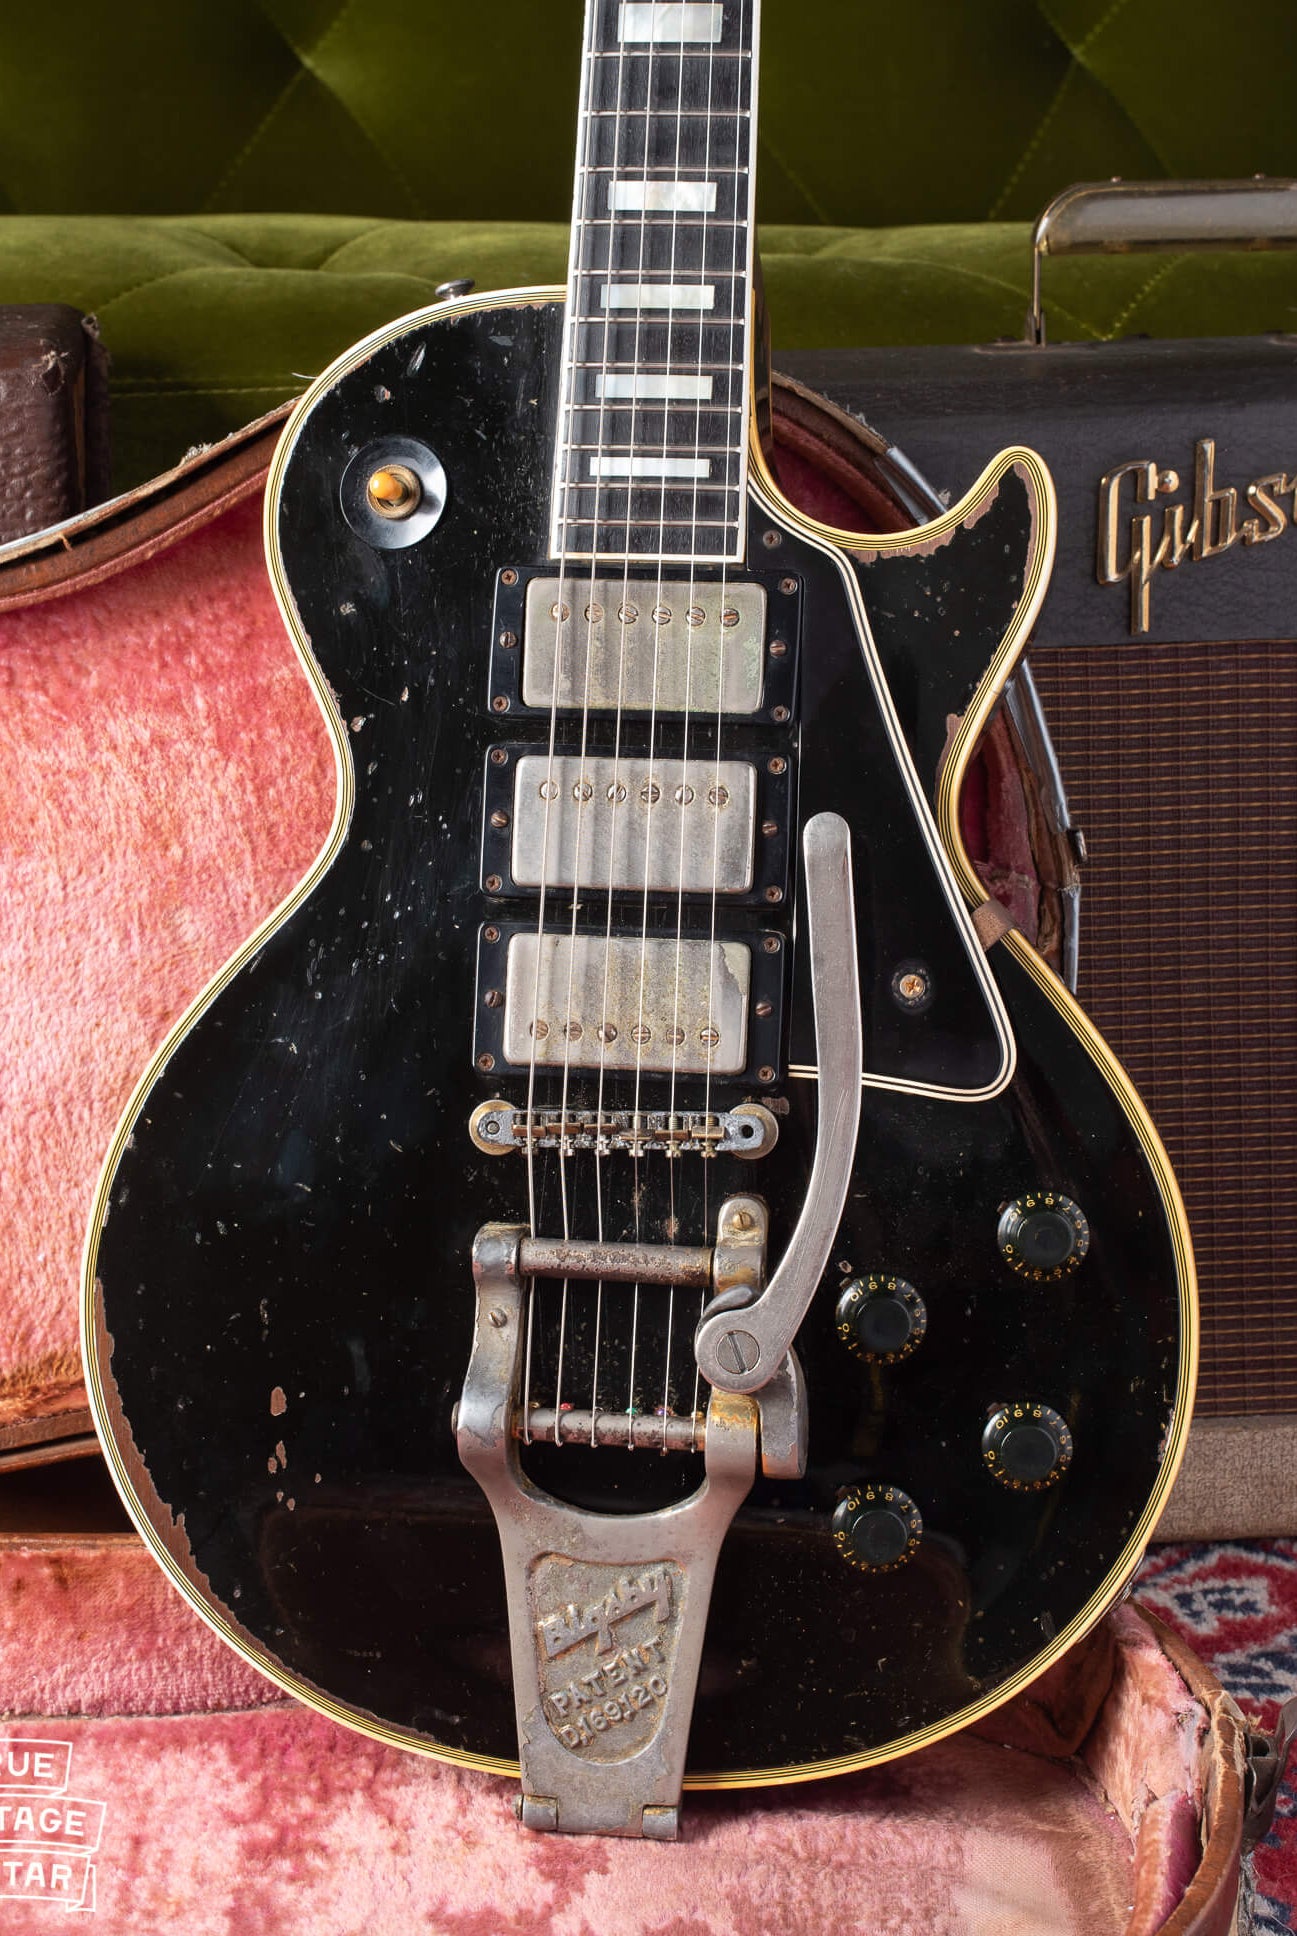 1960 Gibson Les Paul Custom Black guitar with three humbucking pickups